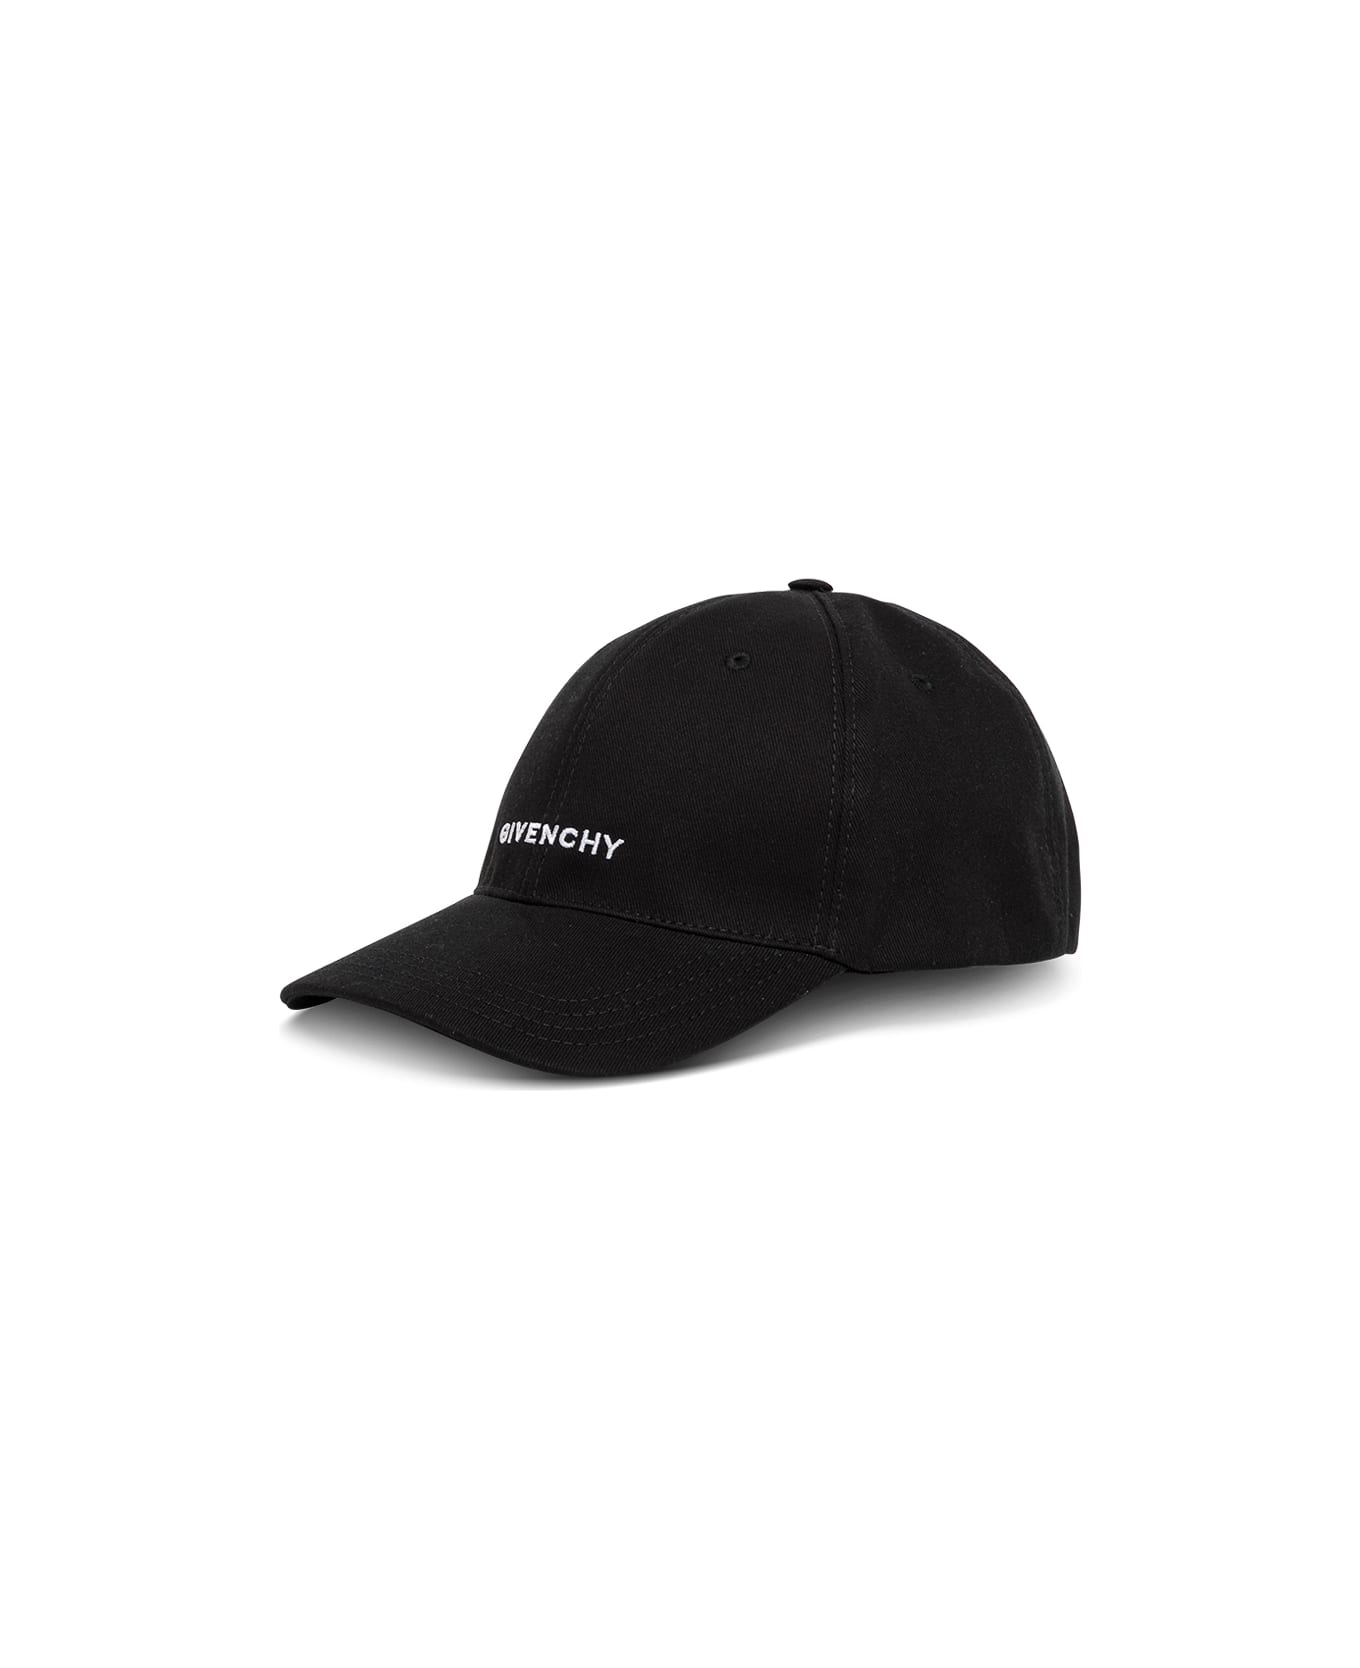 Givenchy Man's Black Cotton Blend Hat With Logo - Black